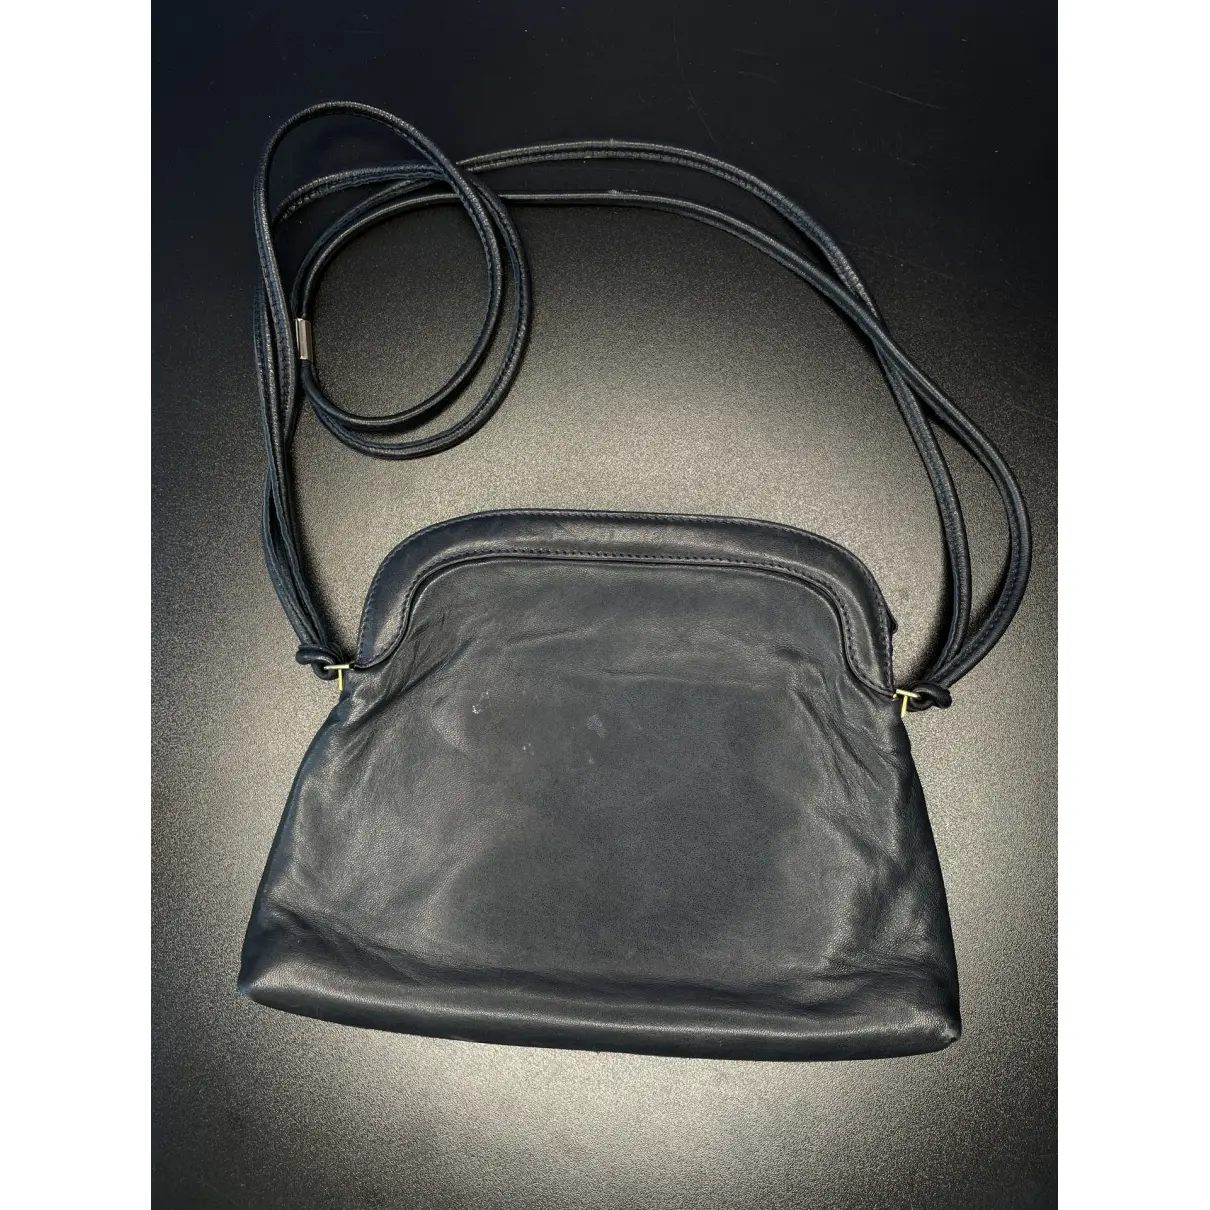 Buy Bally Leather mini bag online